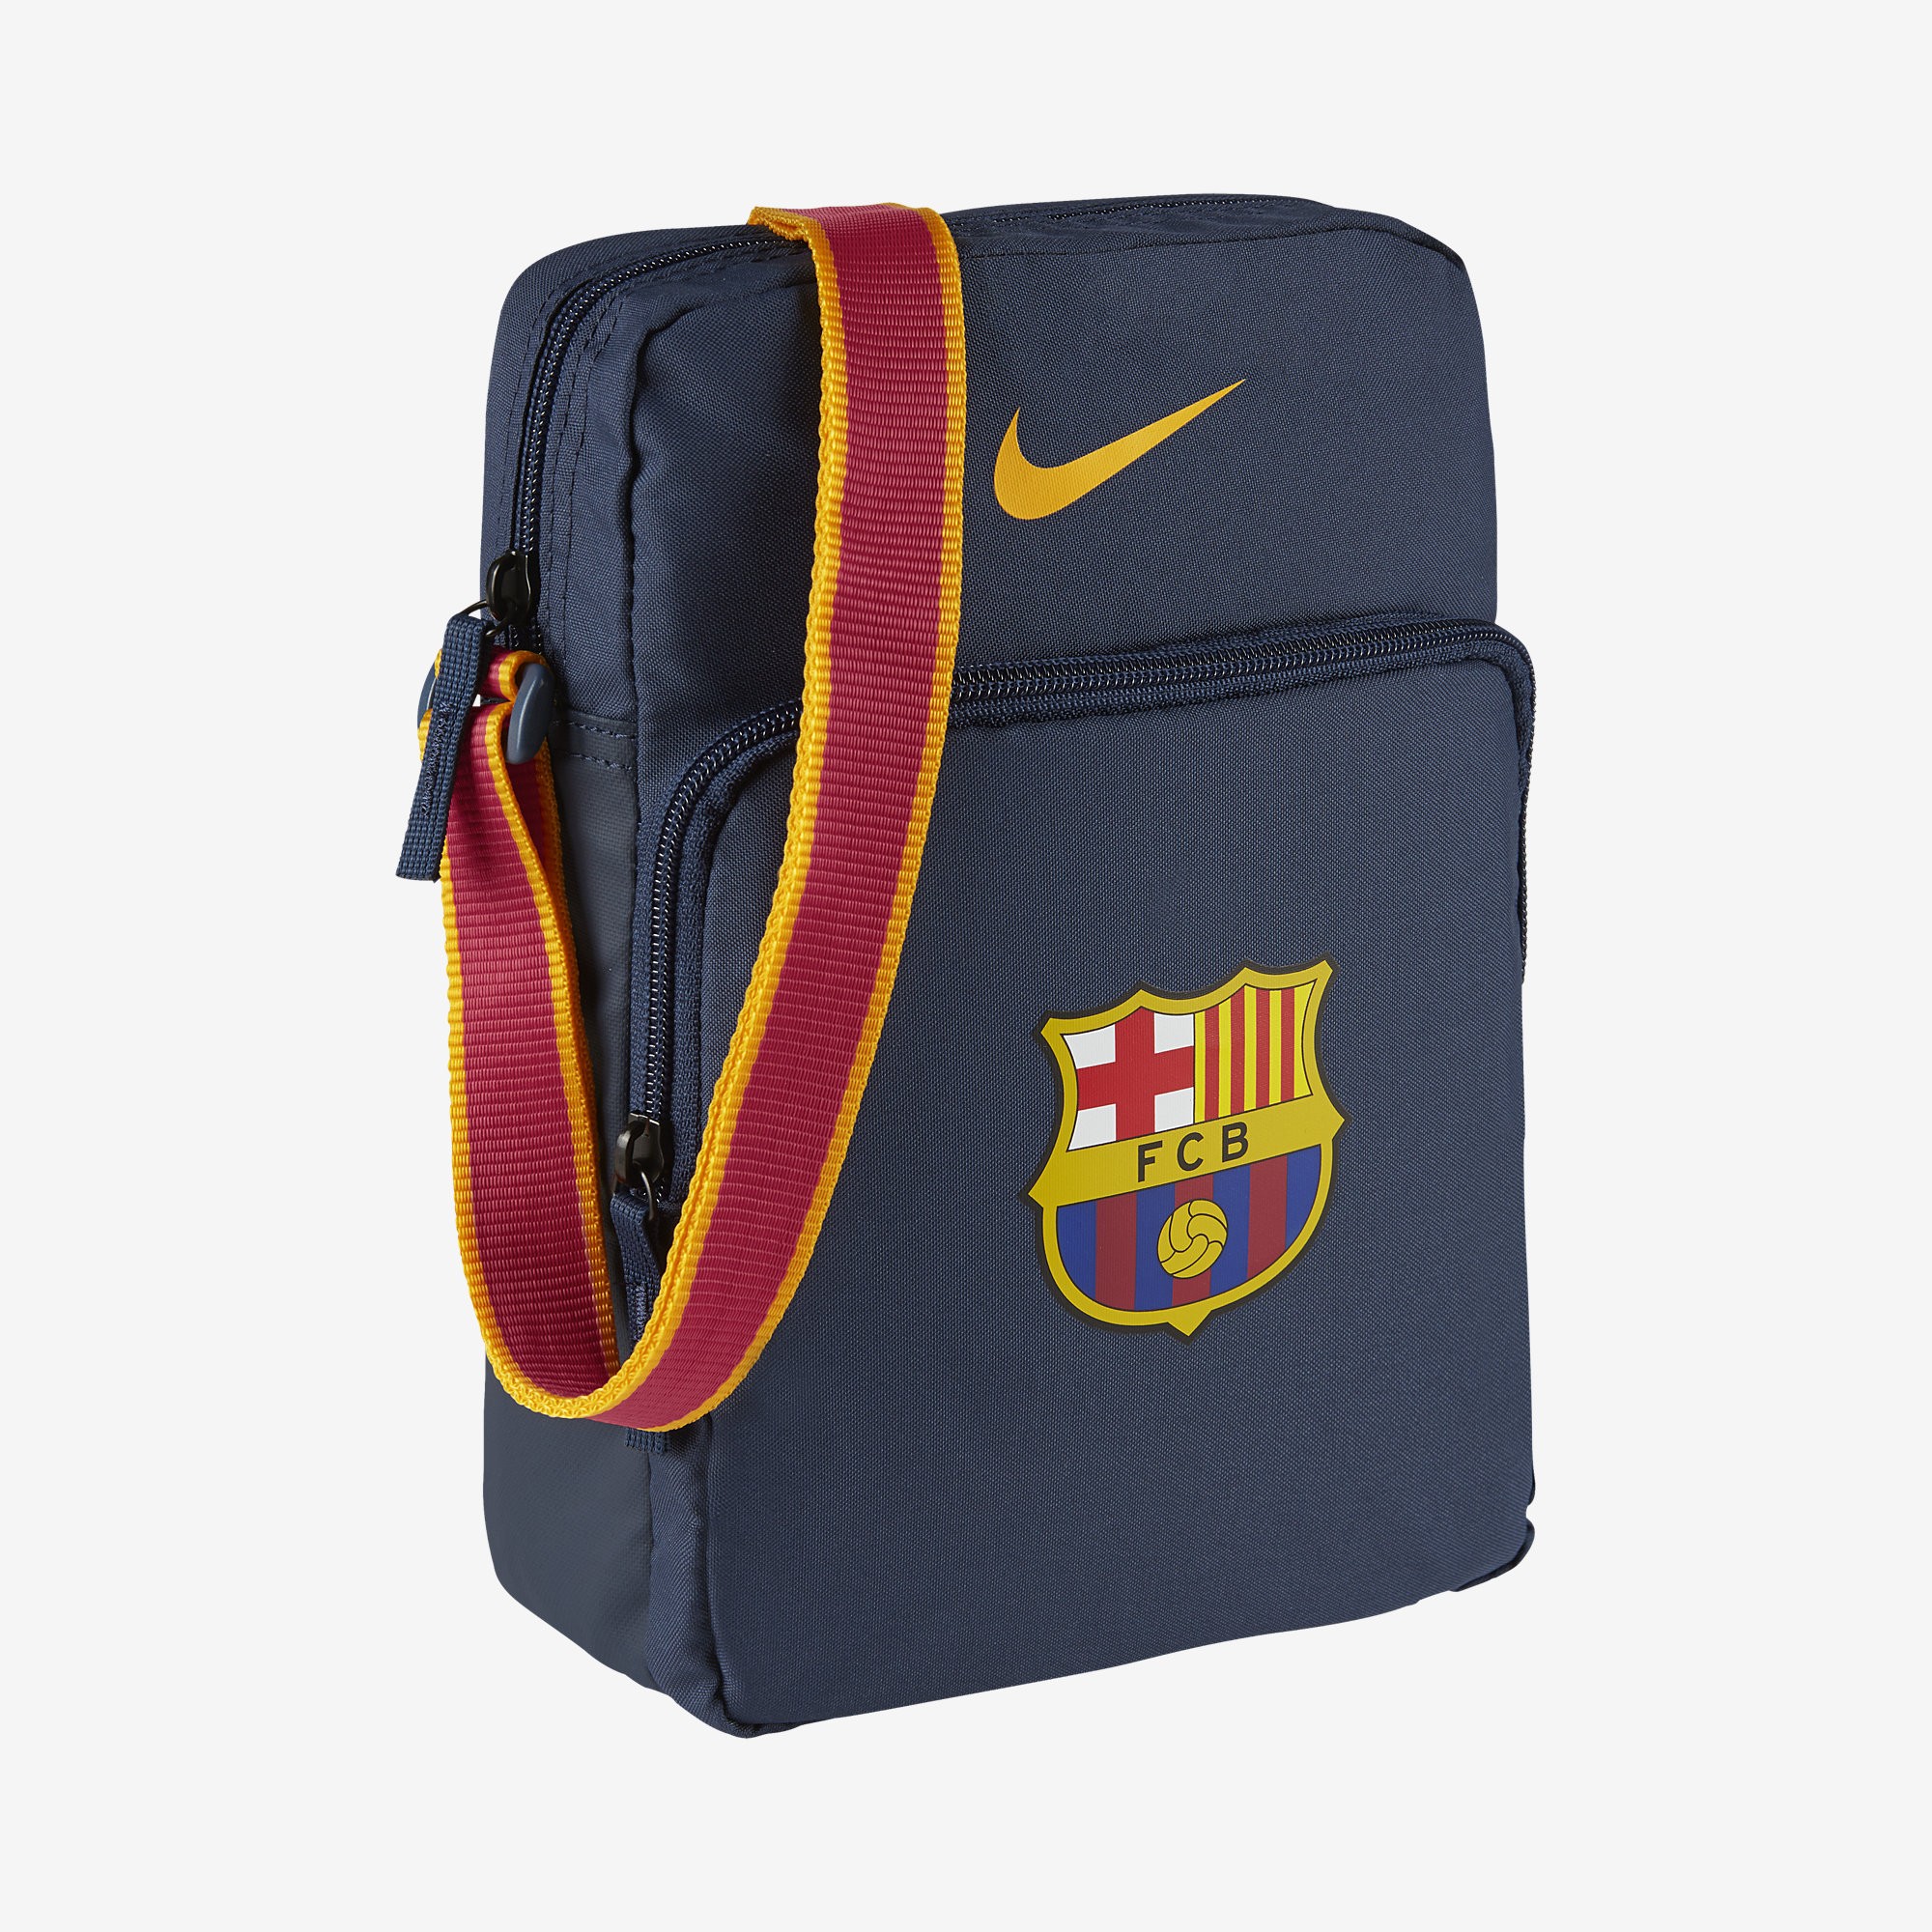 Bandolera Nike FC Barcelona Allegiance Small Items BA5055 410 